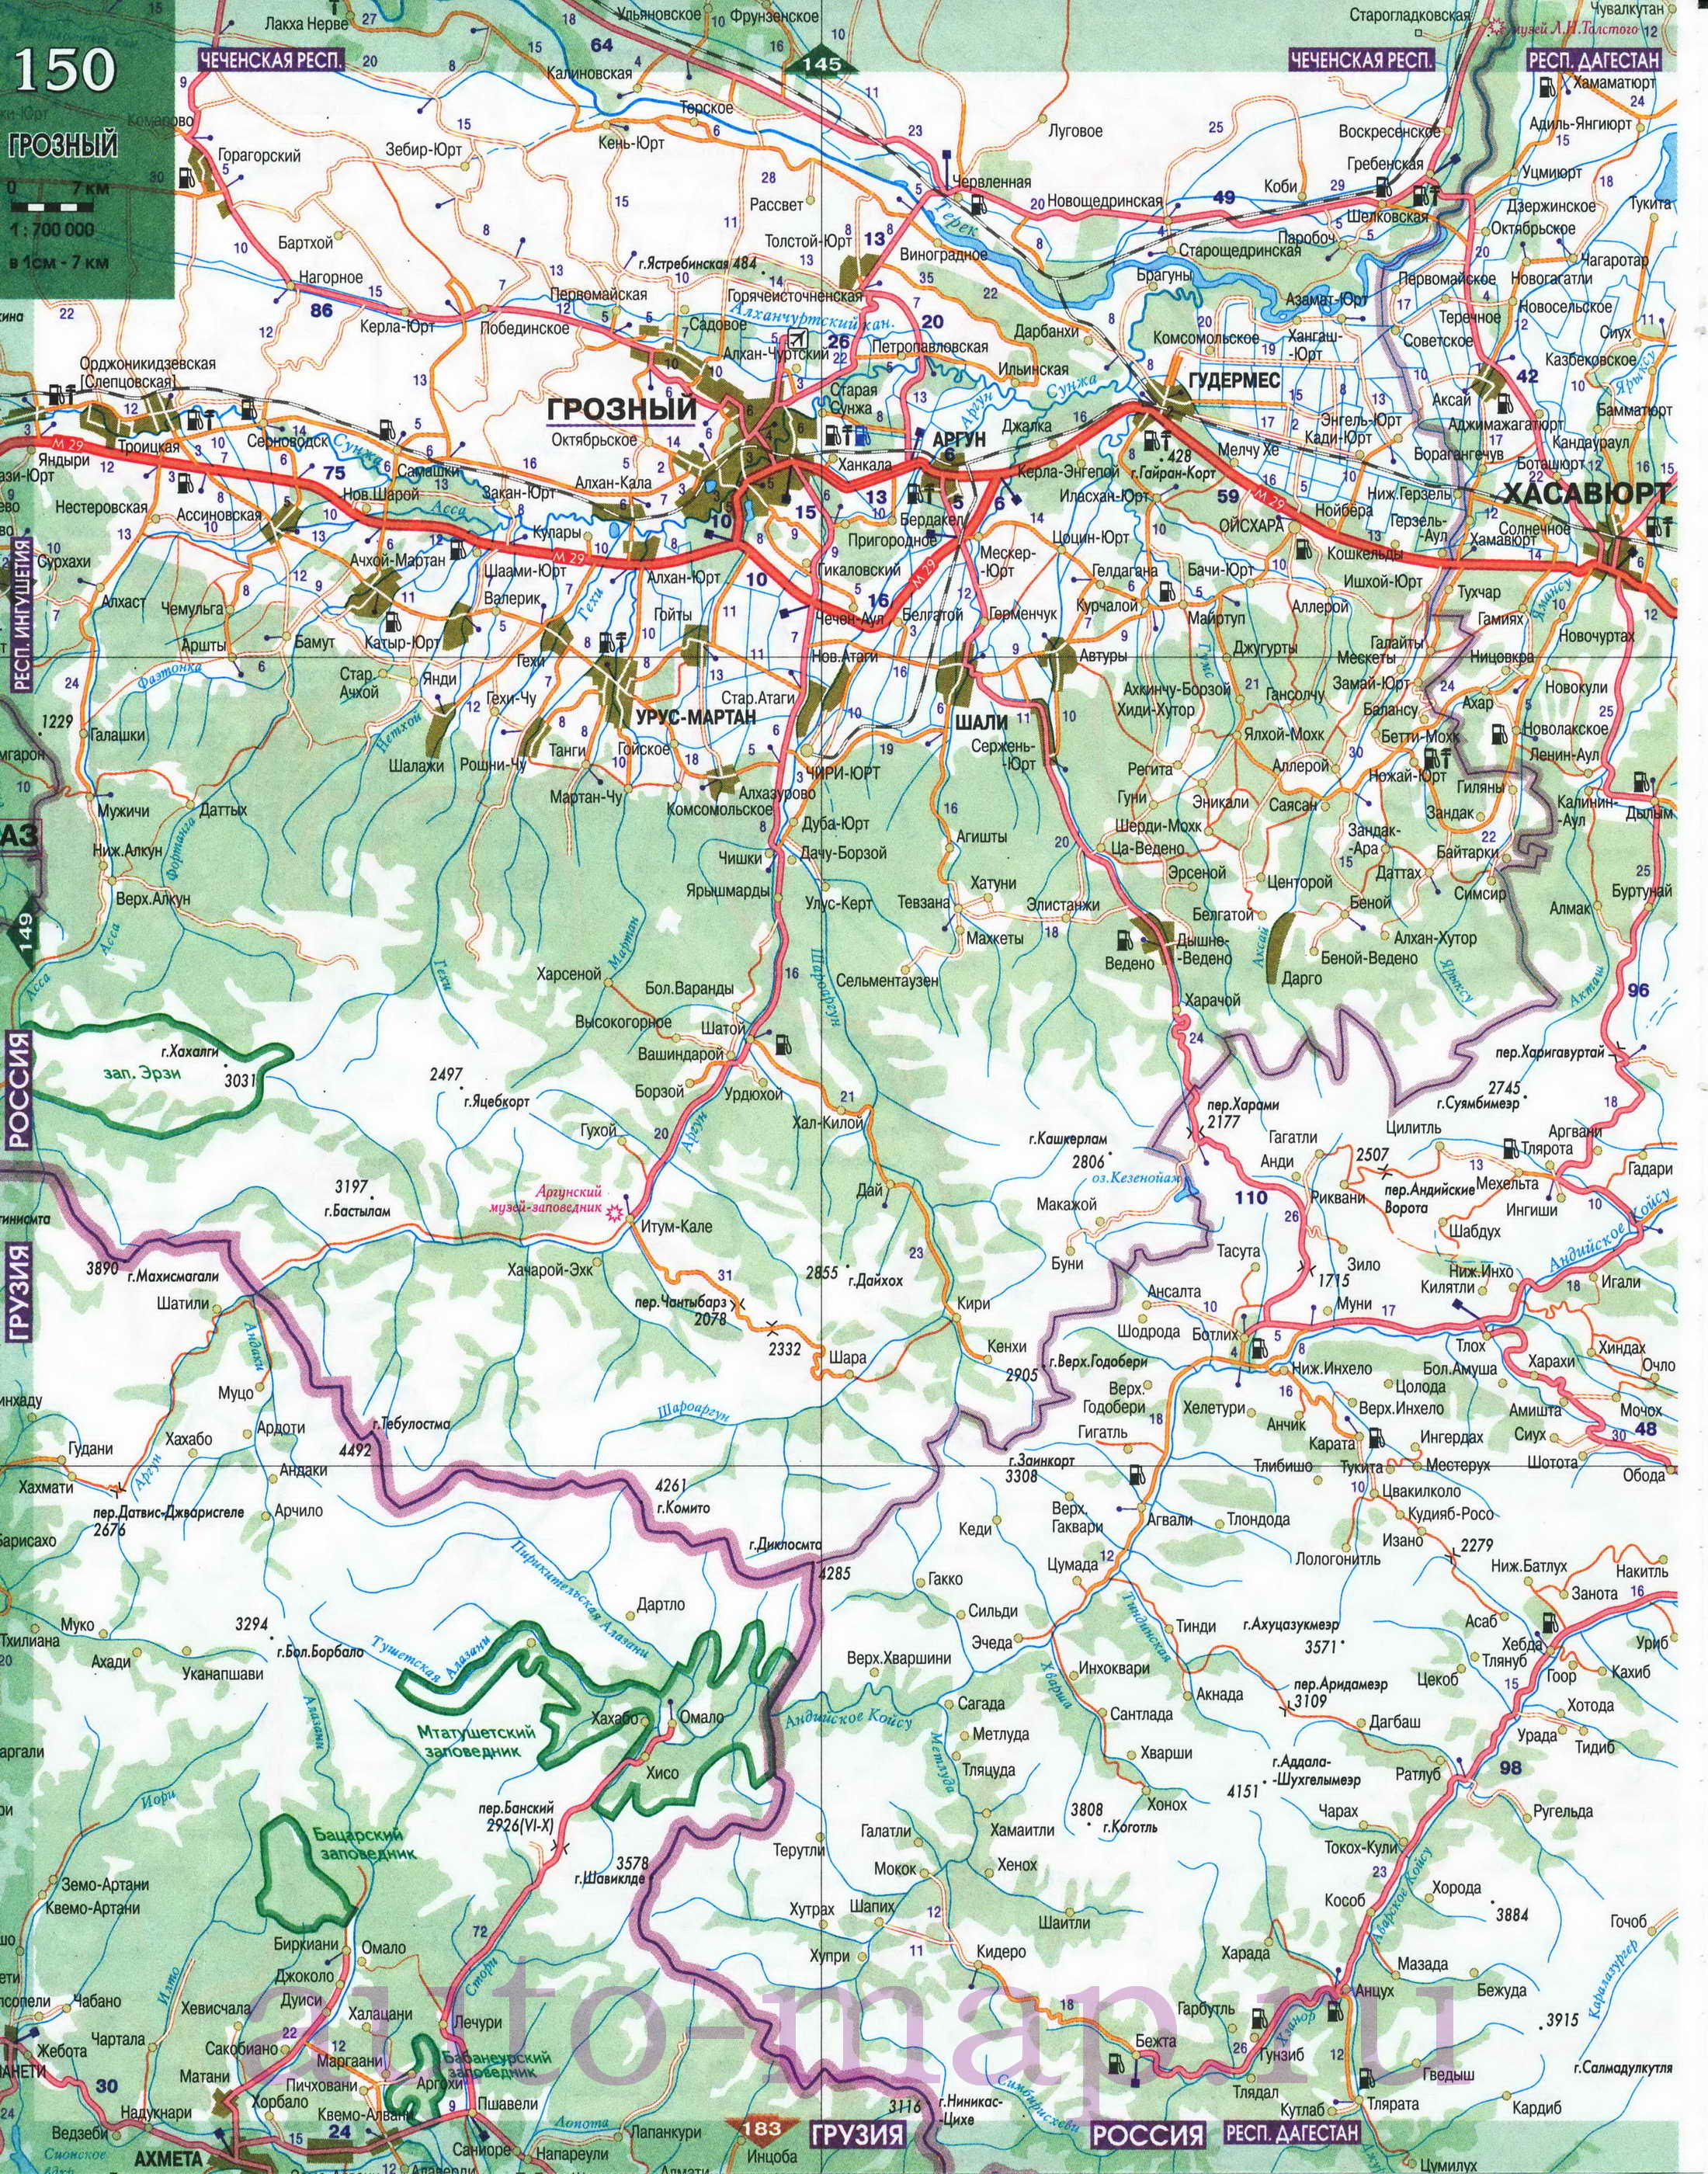  Карта Кавказа. Подробная карта Кавказа. Карта автомобильных дорог Кавказа, E1 - 